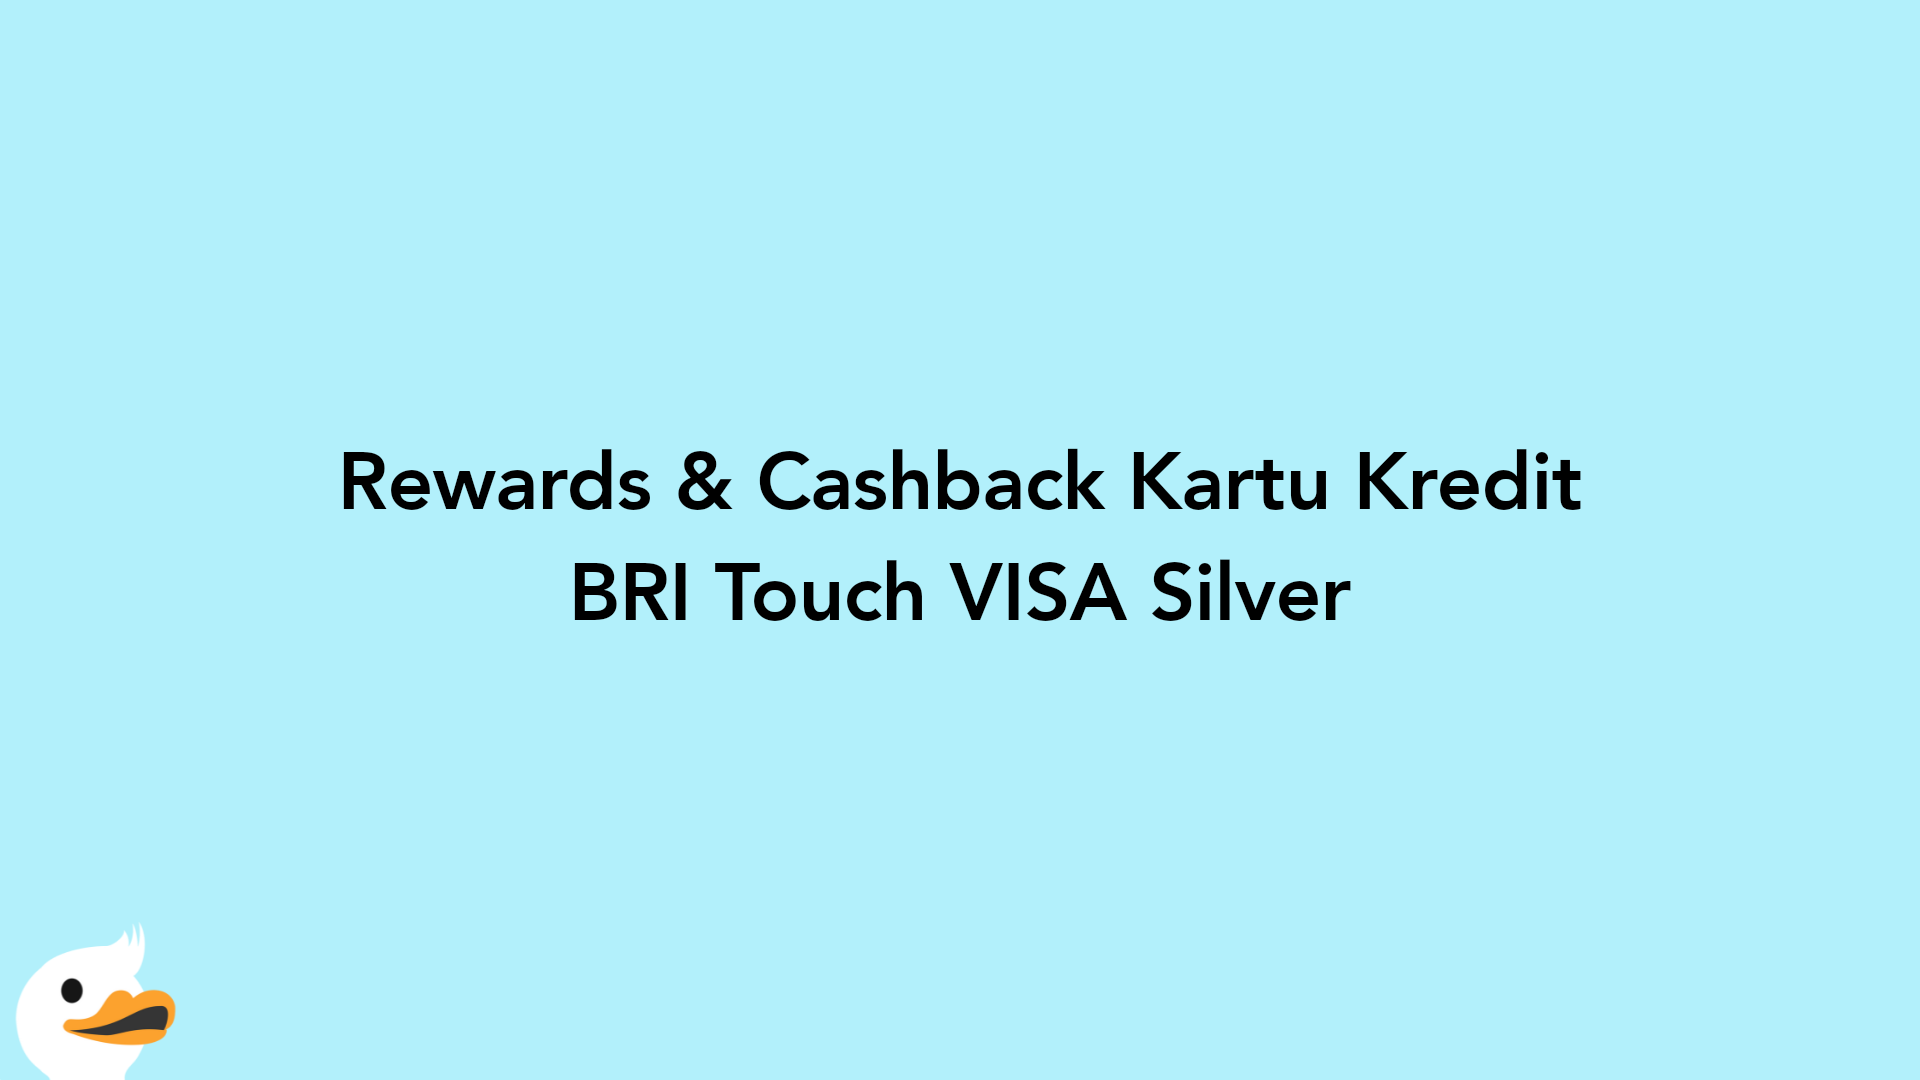 Rewards & Cashback Kartu Kredit BRI Touch VISA Silver